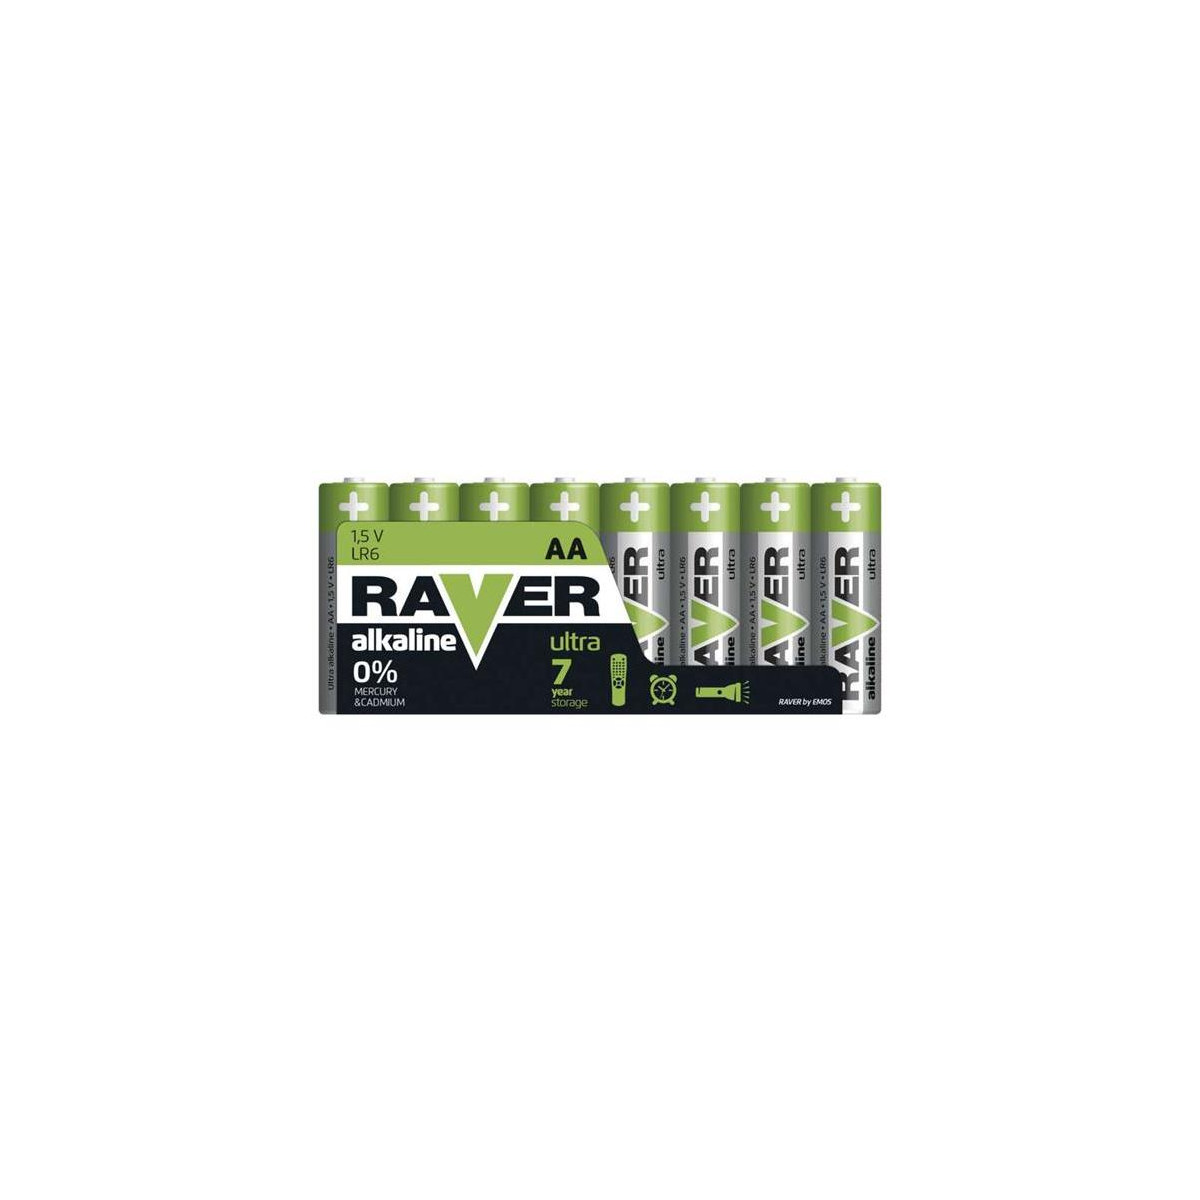 More about Baterie AA (R6) alkalická RAVER 8ks